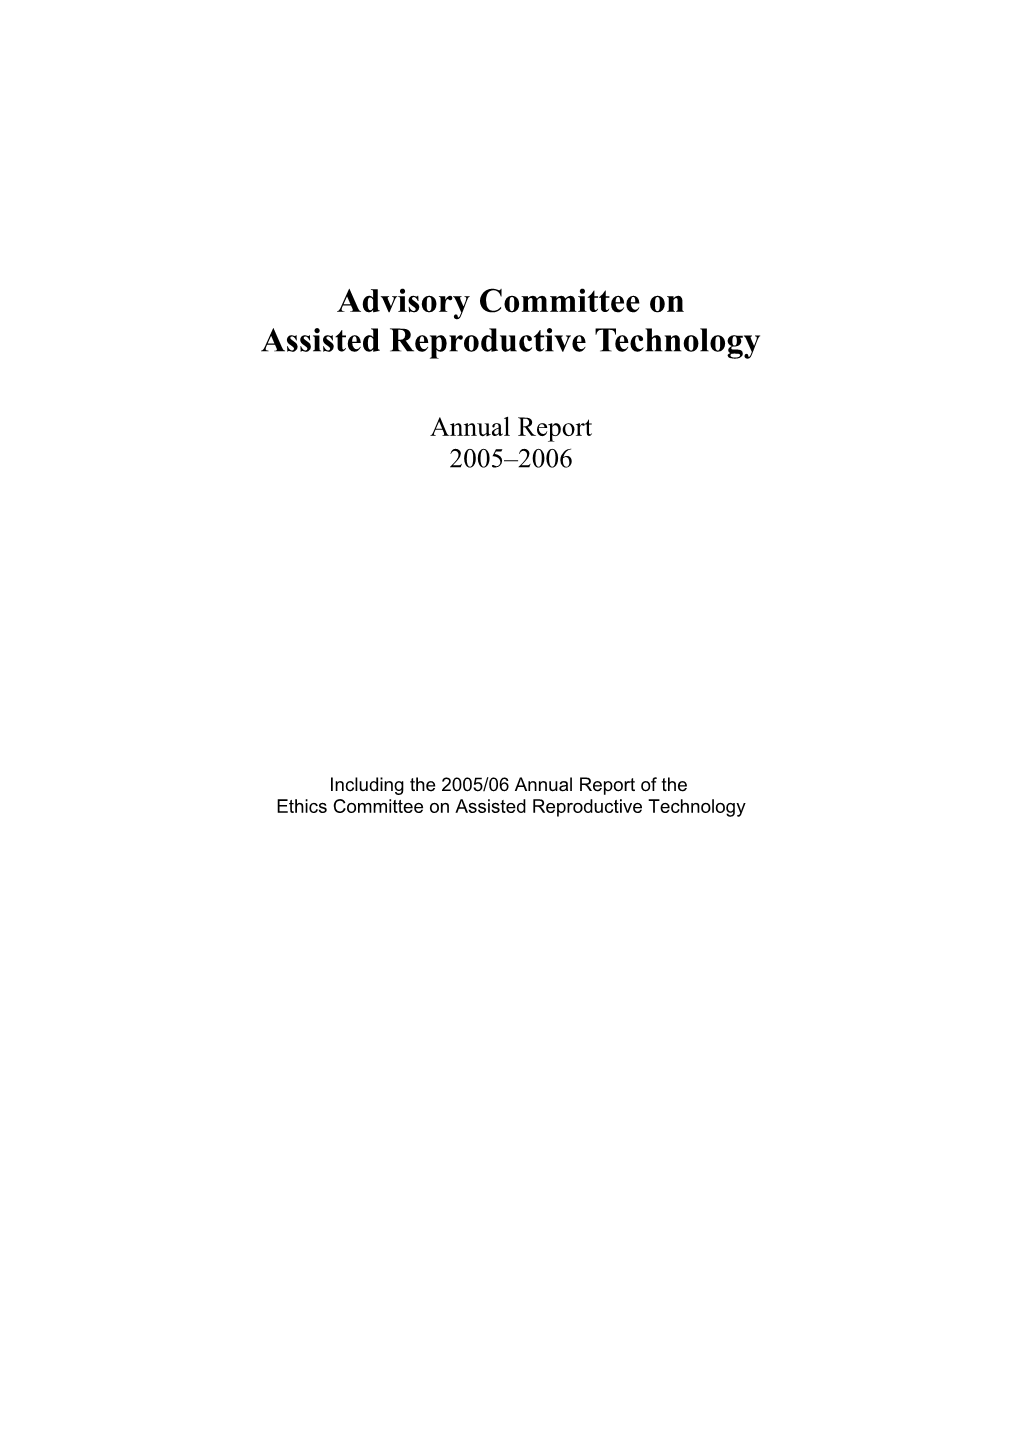 ACART Annual Report 2005/06